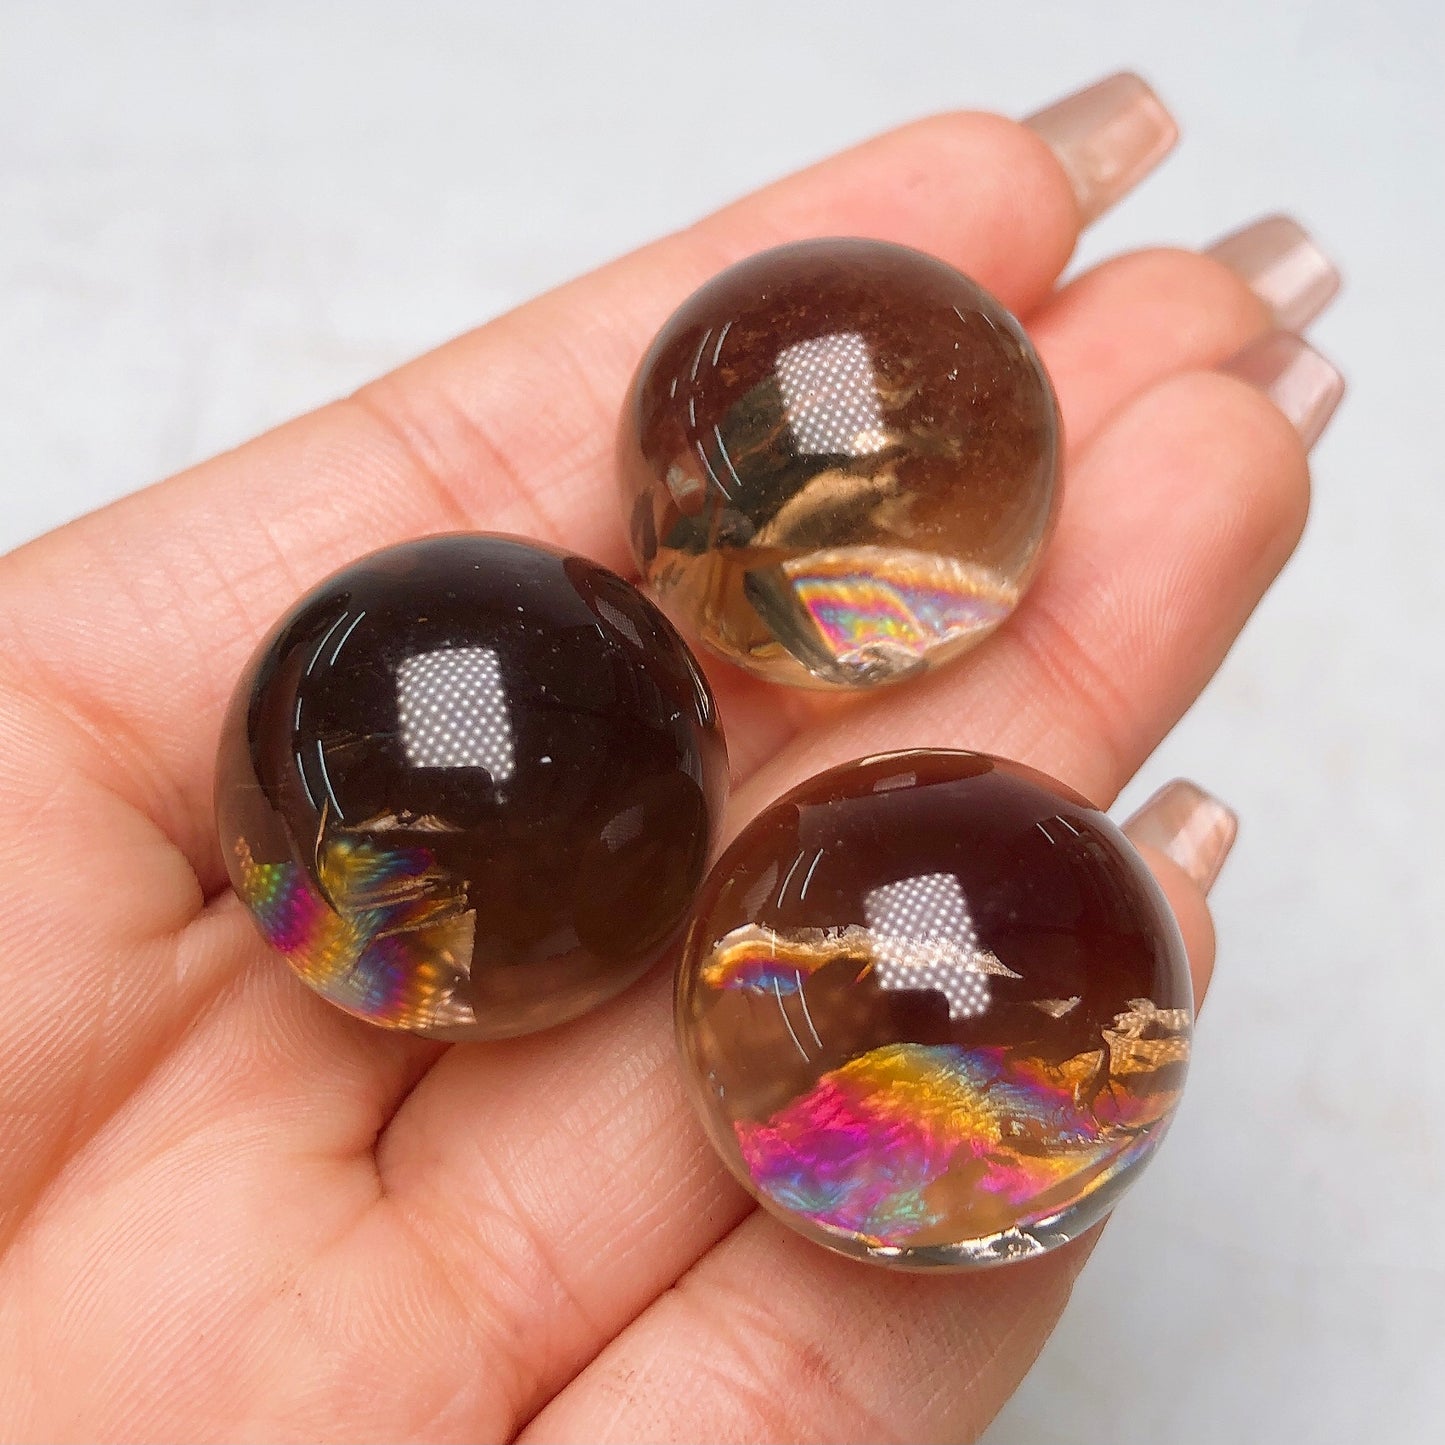 Smoky quartz sphere/Crystal ball/Self healing/Rainbow flash